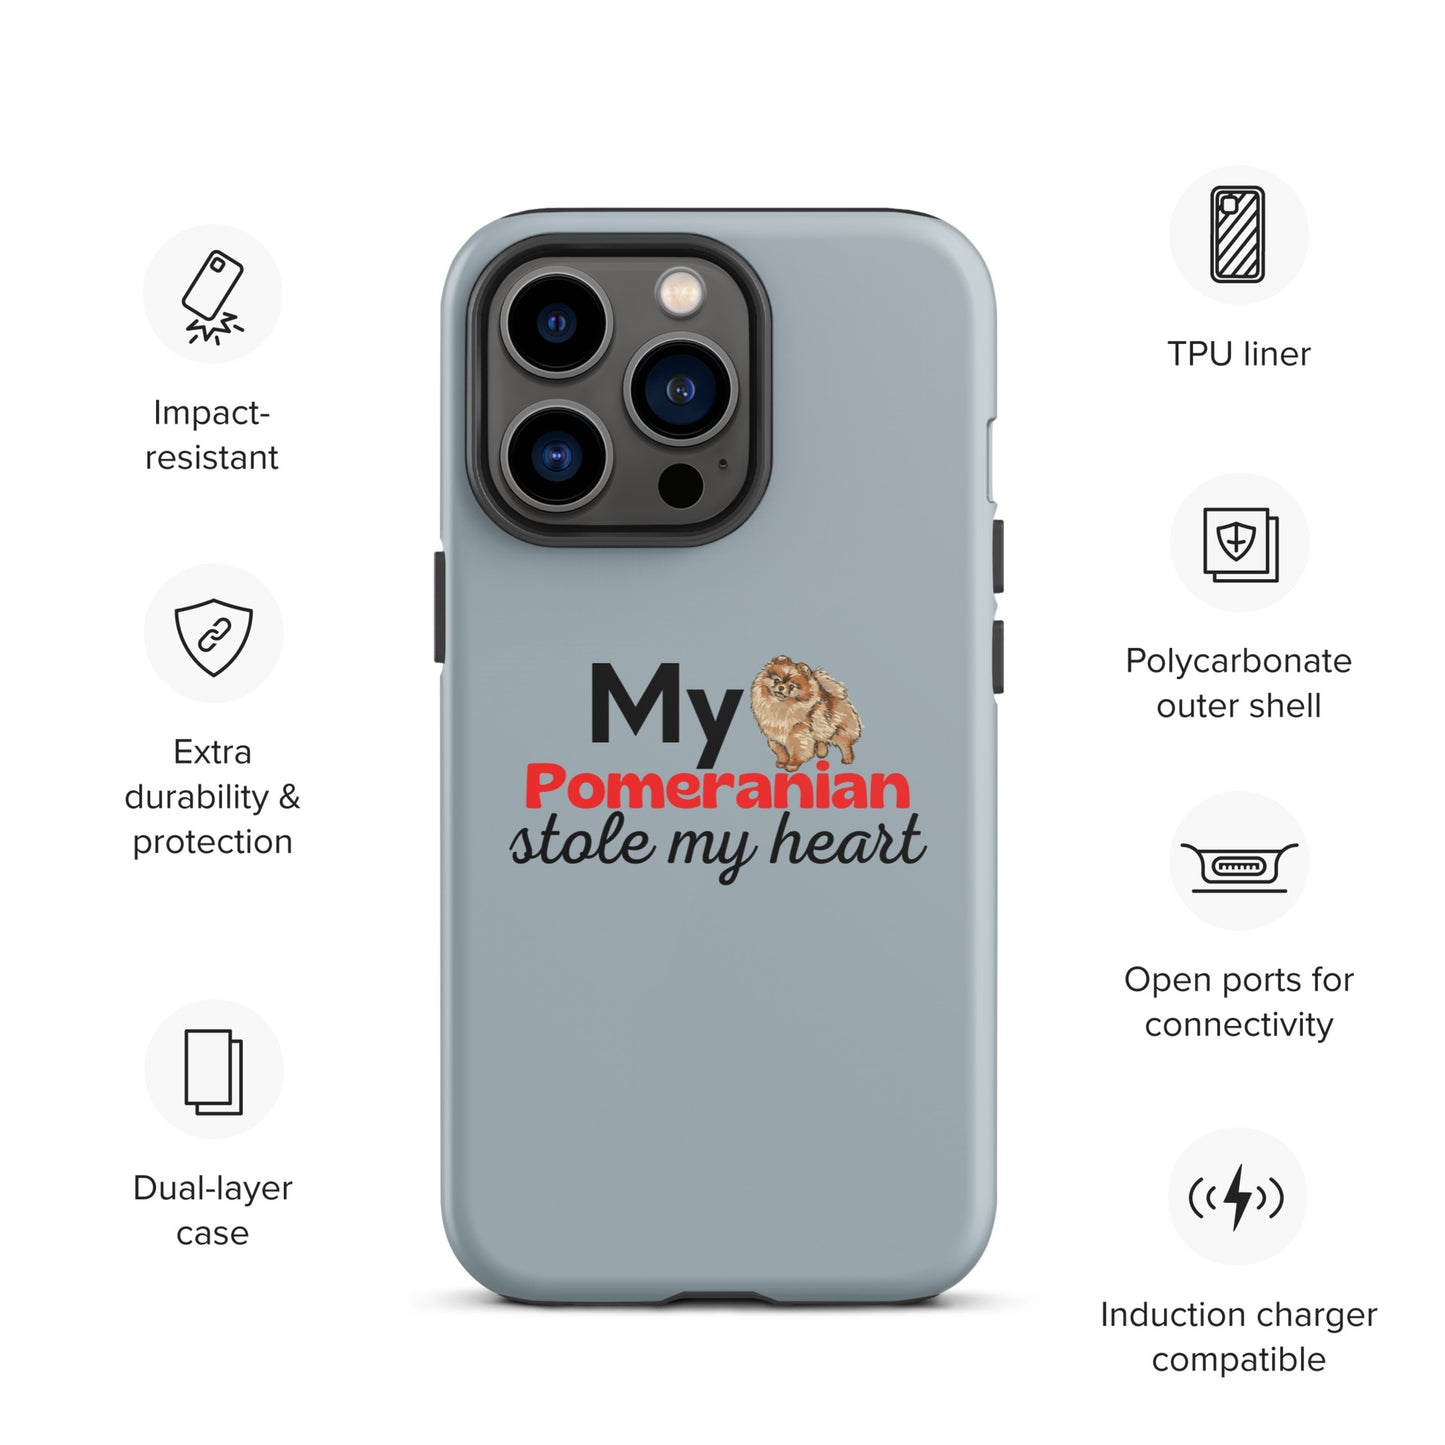 iPhone case 'My Pomeranian stole my heart' Grey